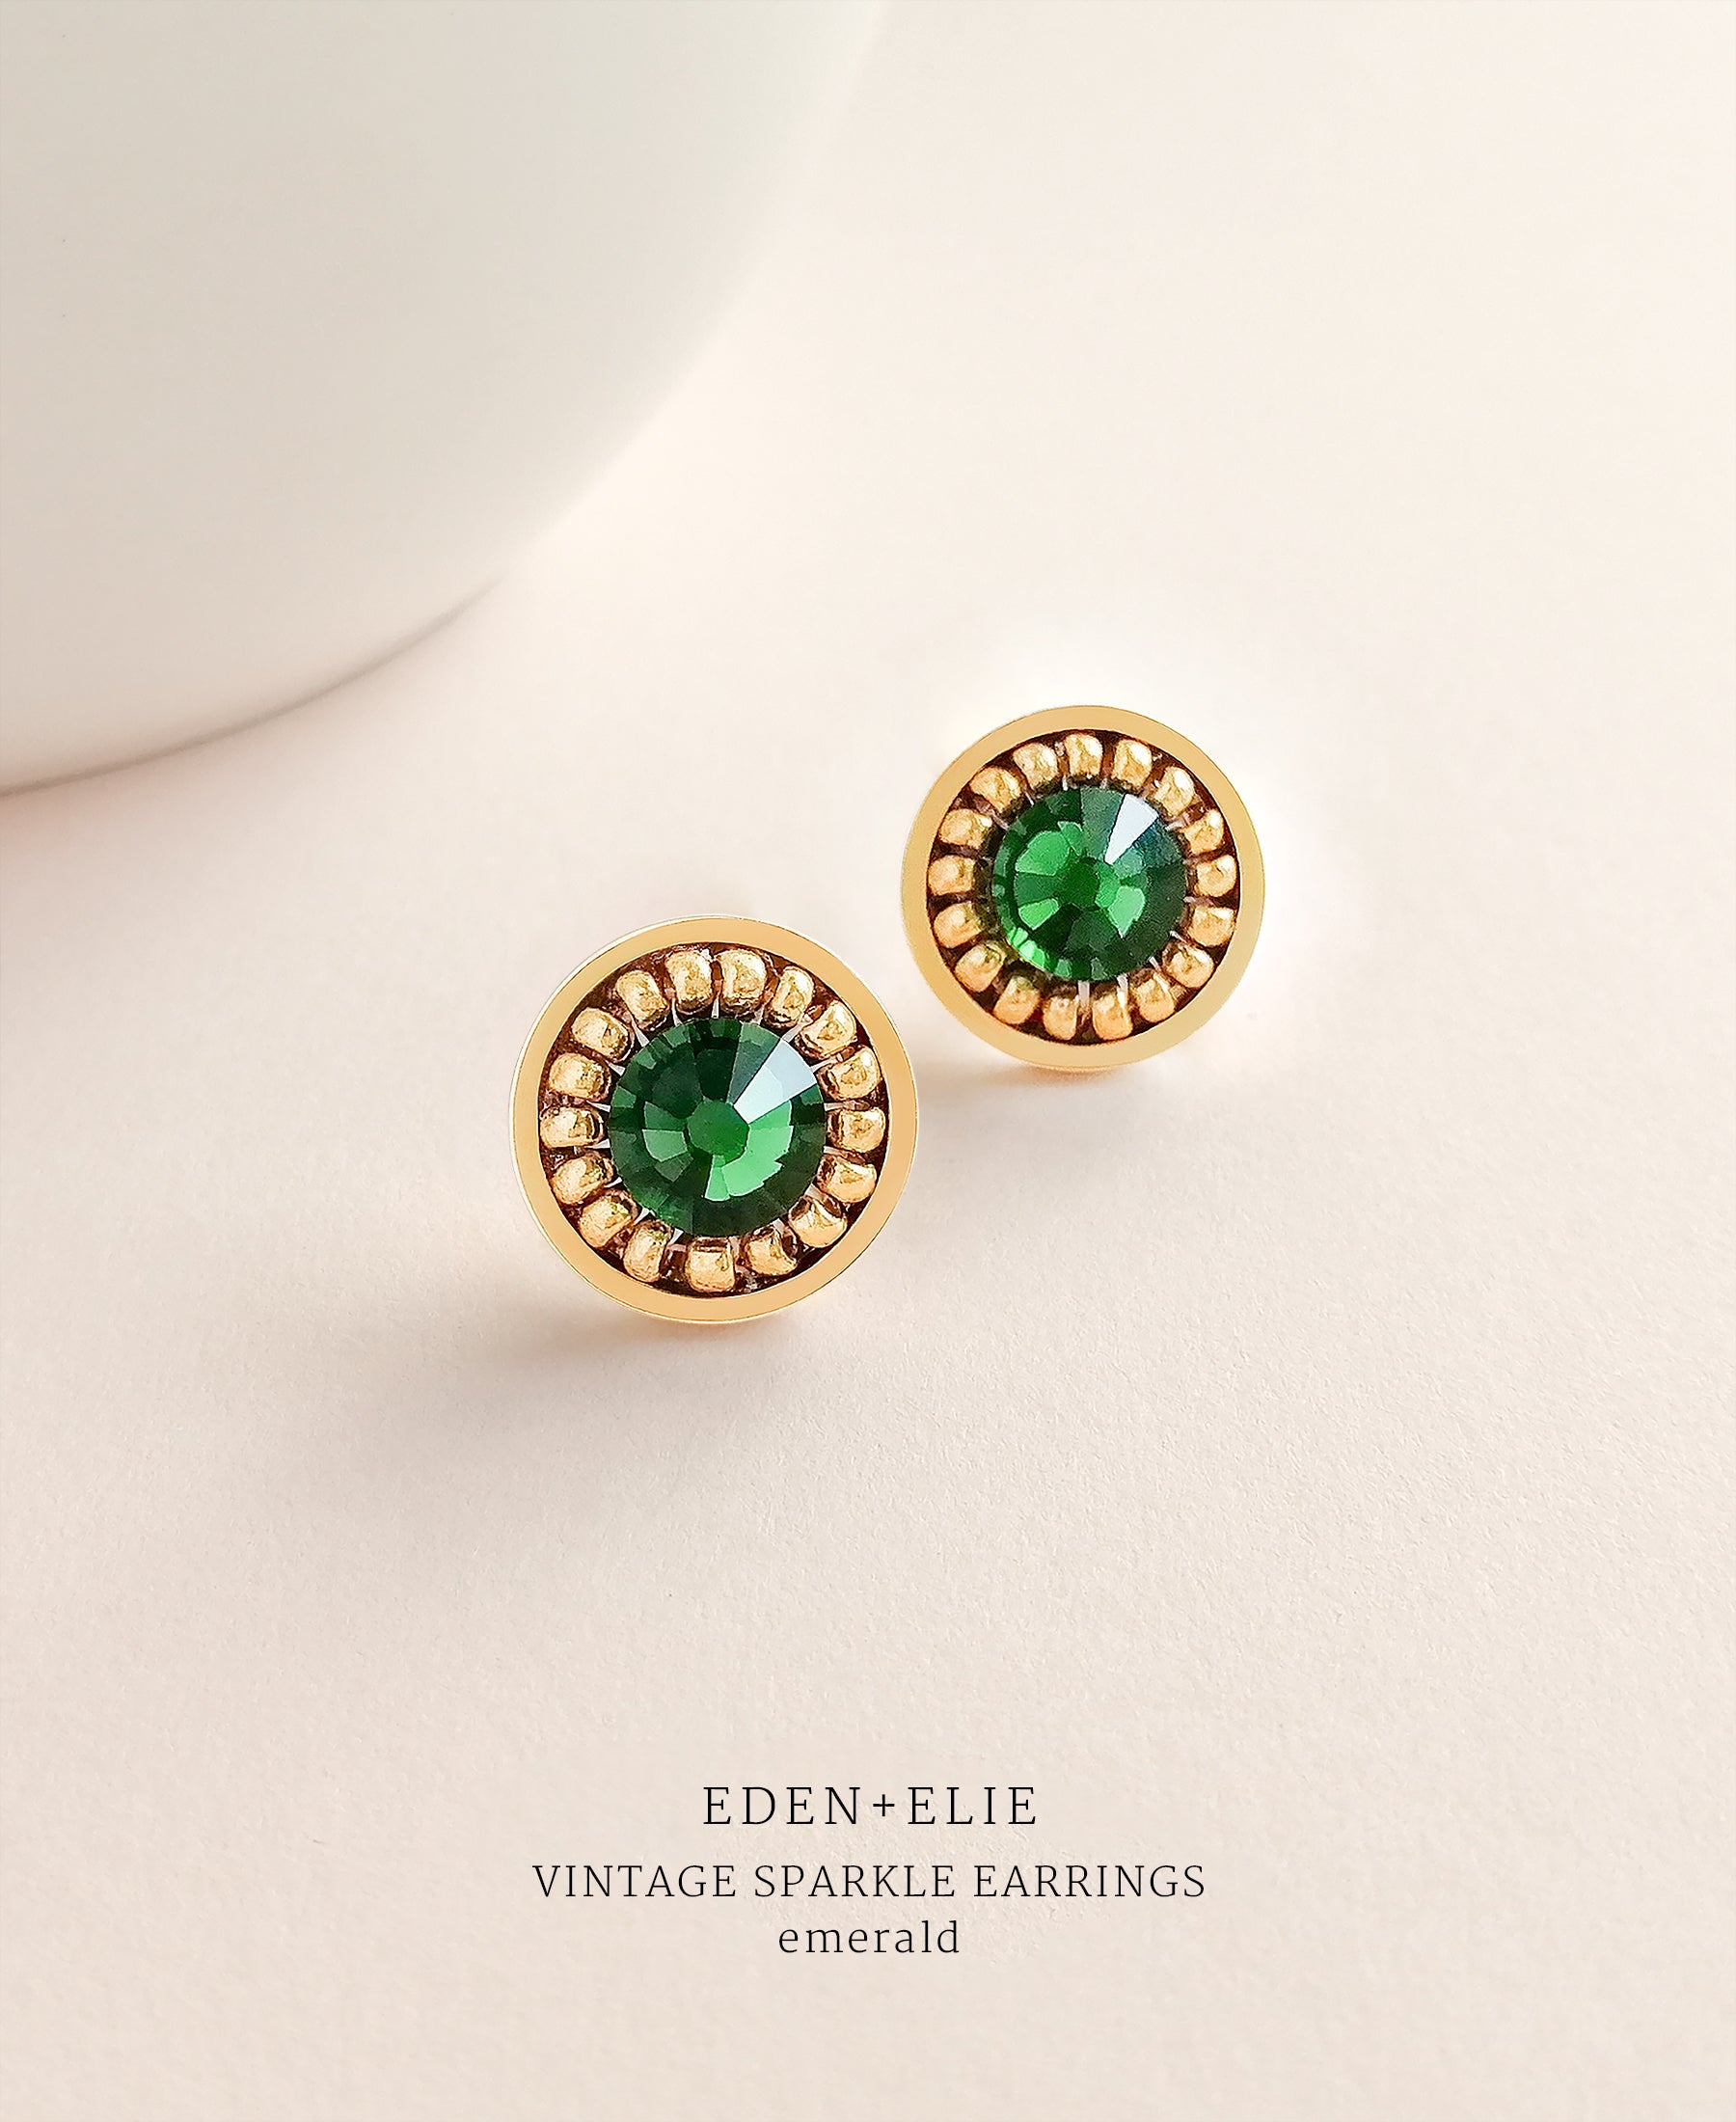 EDEN + ELIE Vintage Sparkle stud earrings - emerald green